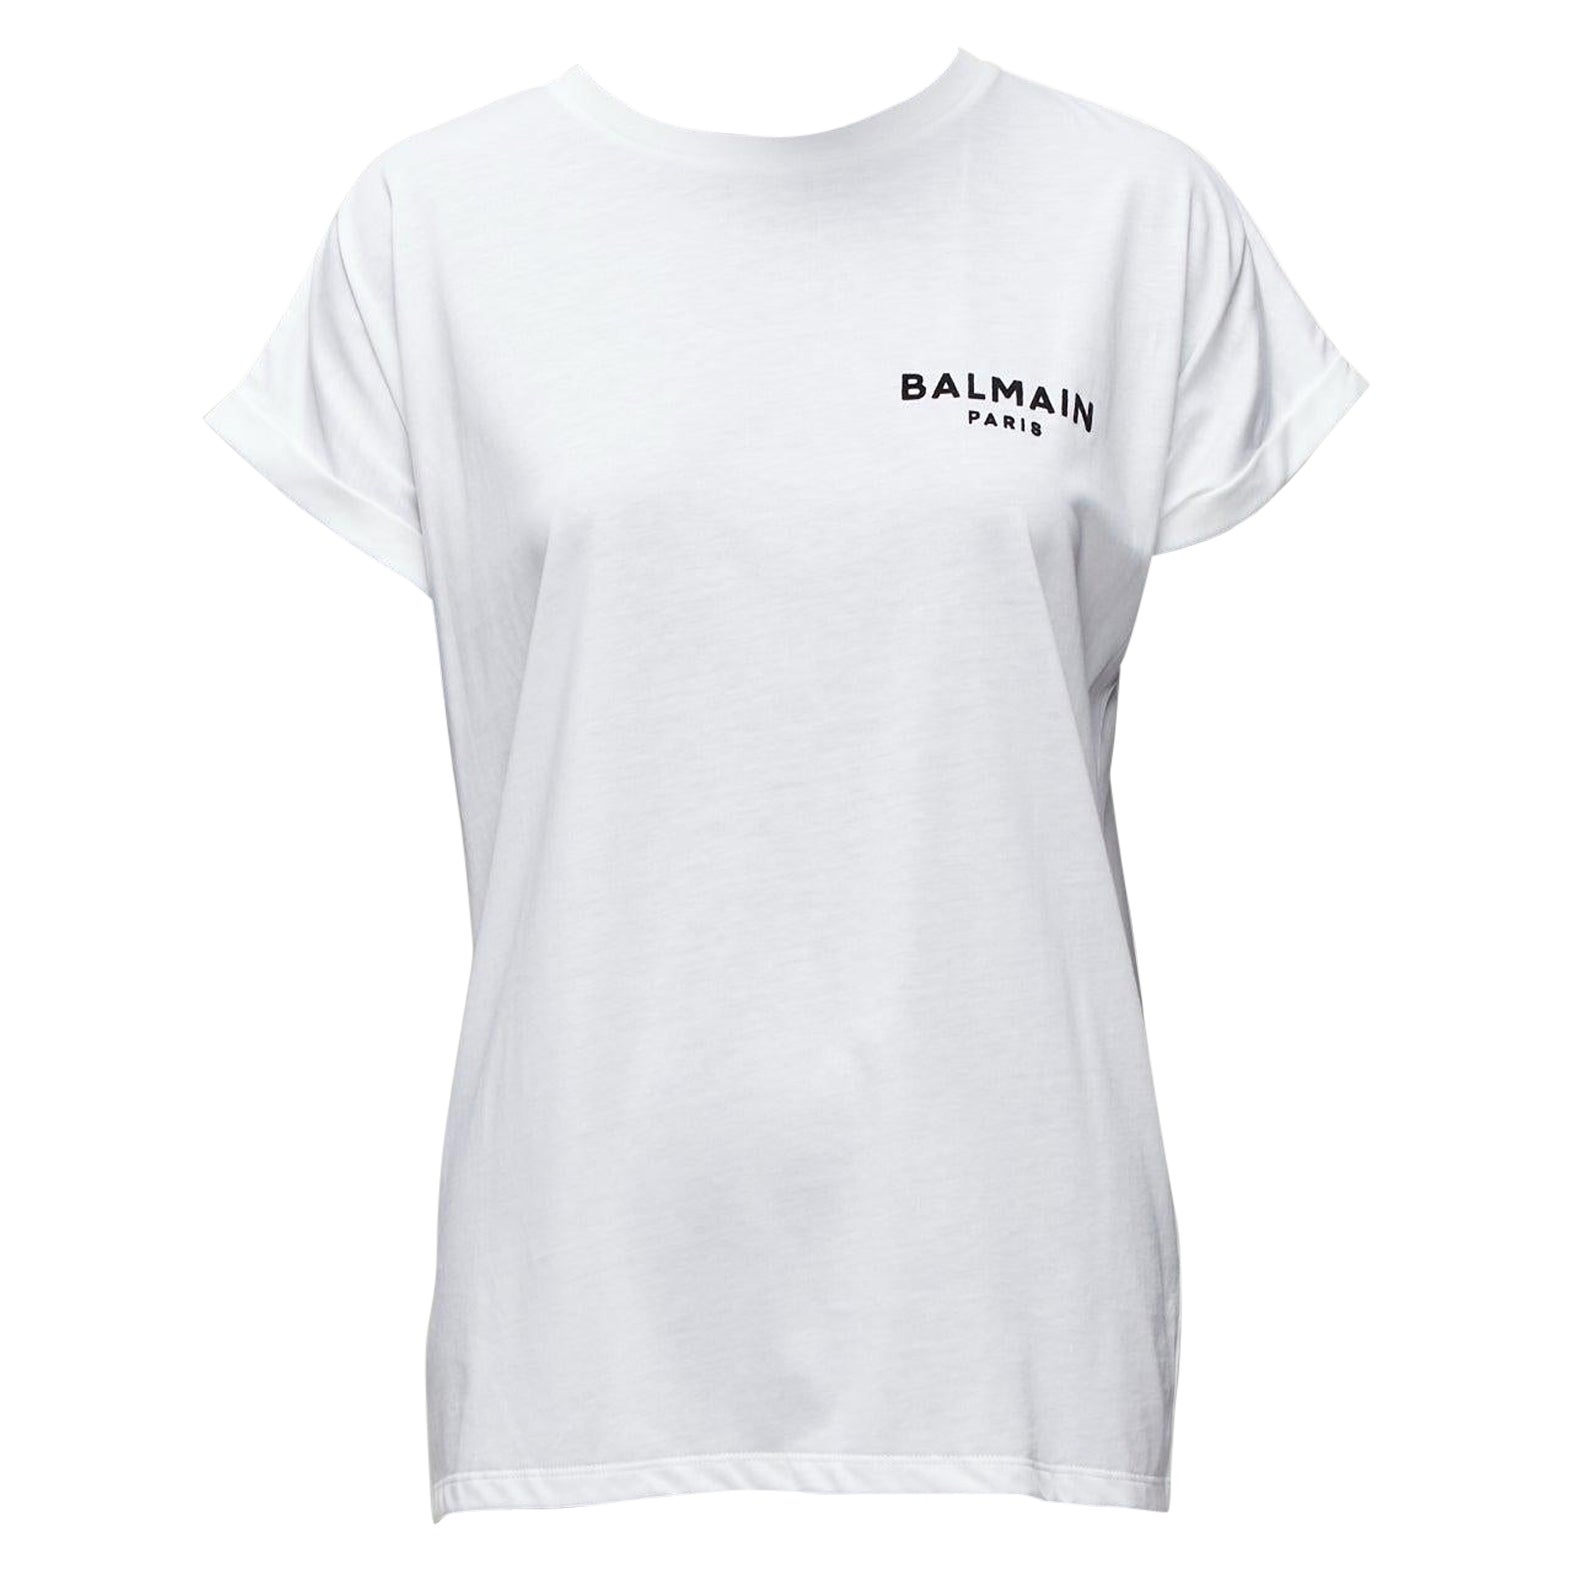 Where can I buy a Balmain T-shirt?